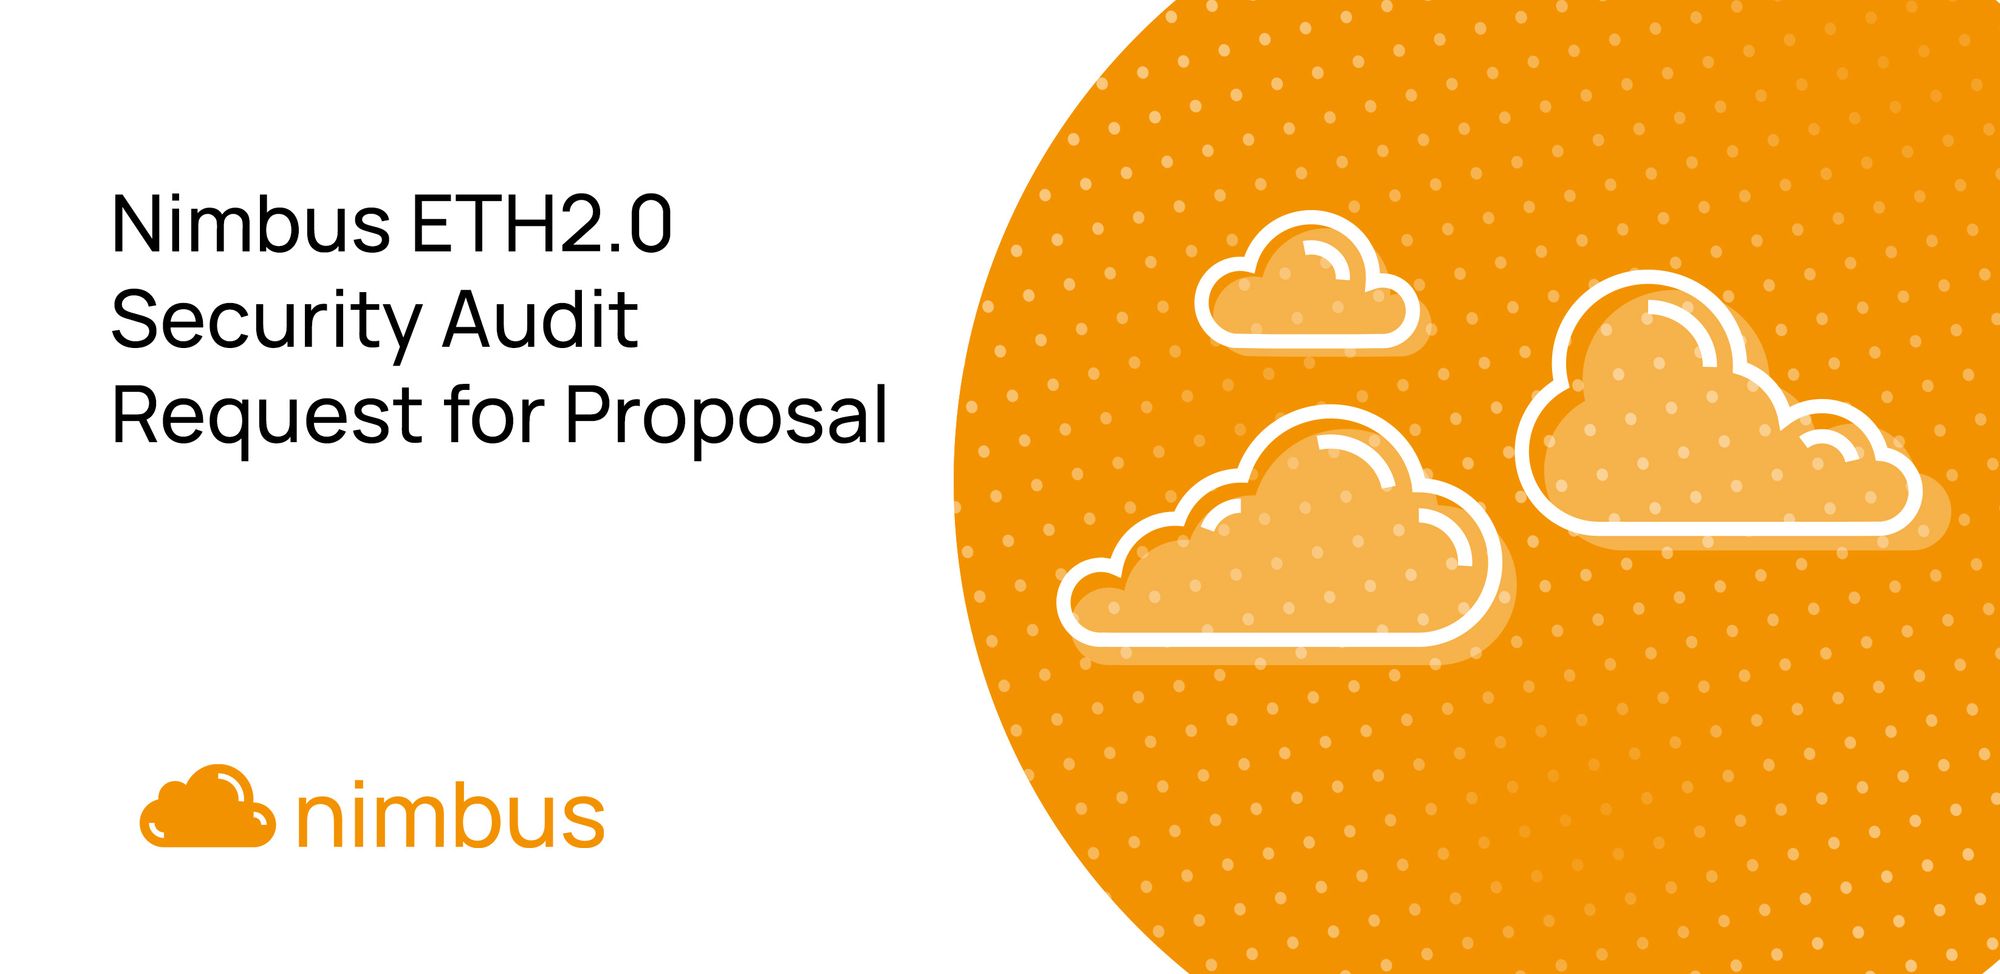 Nimbus ETH2.0 Security Audit Request for Proposal